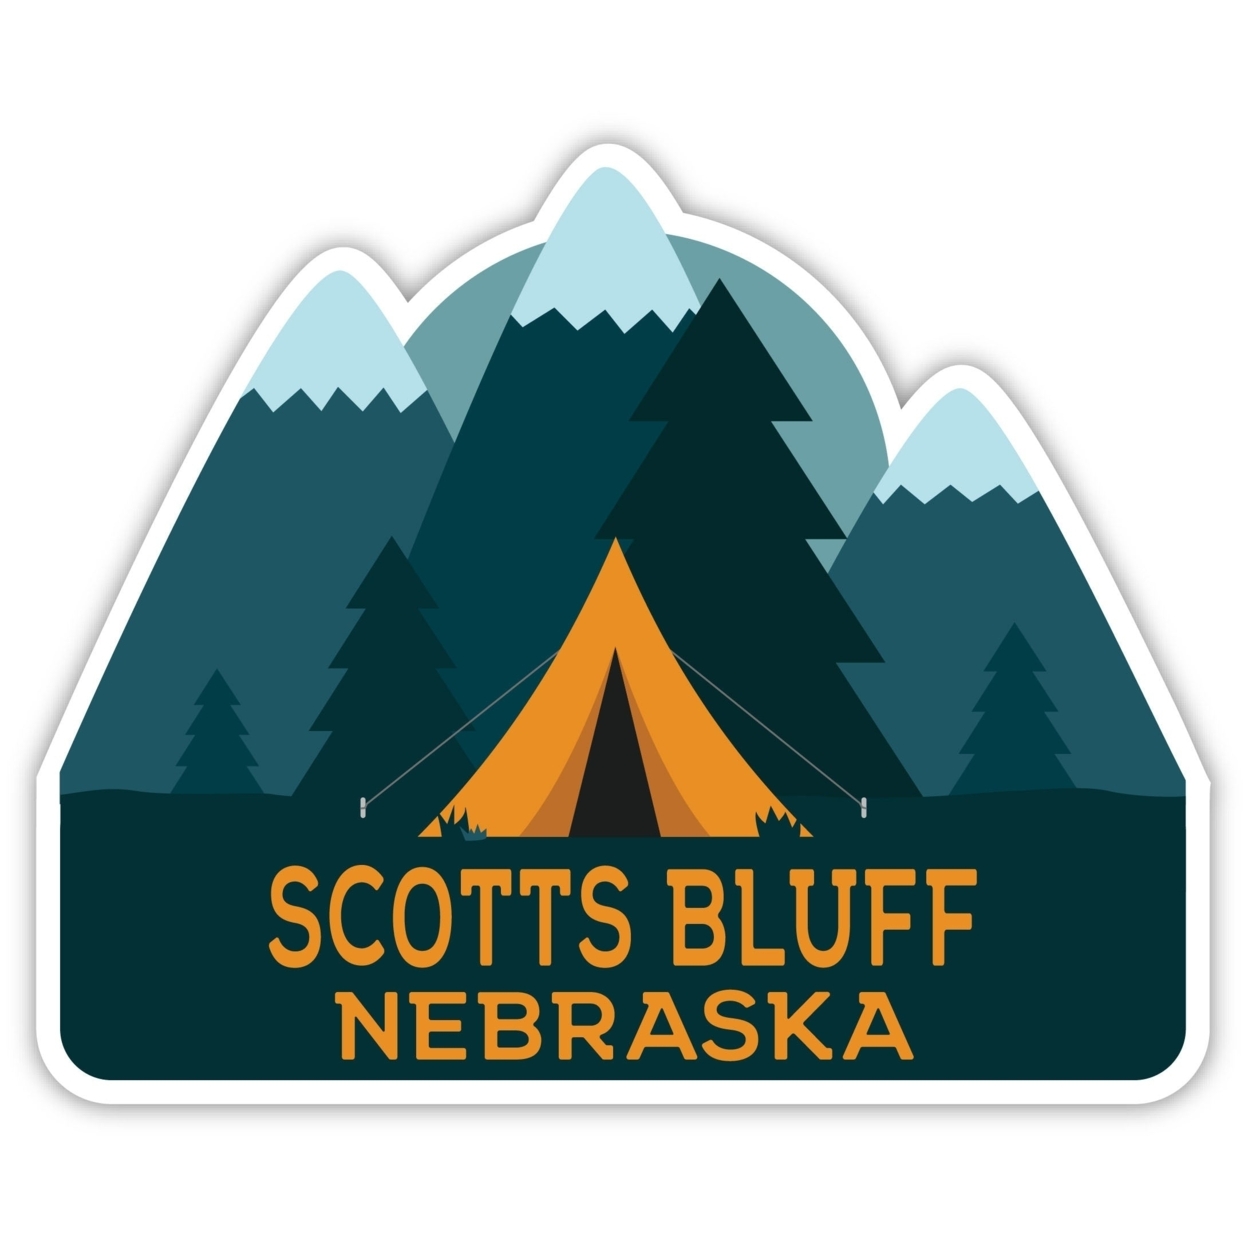 Scotts Bluff Nebraska Souvenir Decorative Stickers (Choose Theme And Size) - Single Unit, 2-Inch, Tent